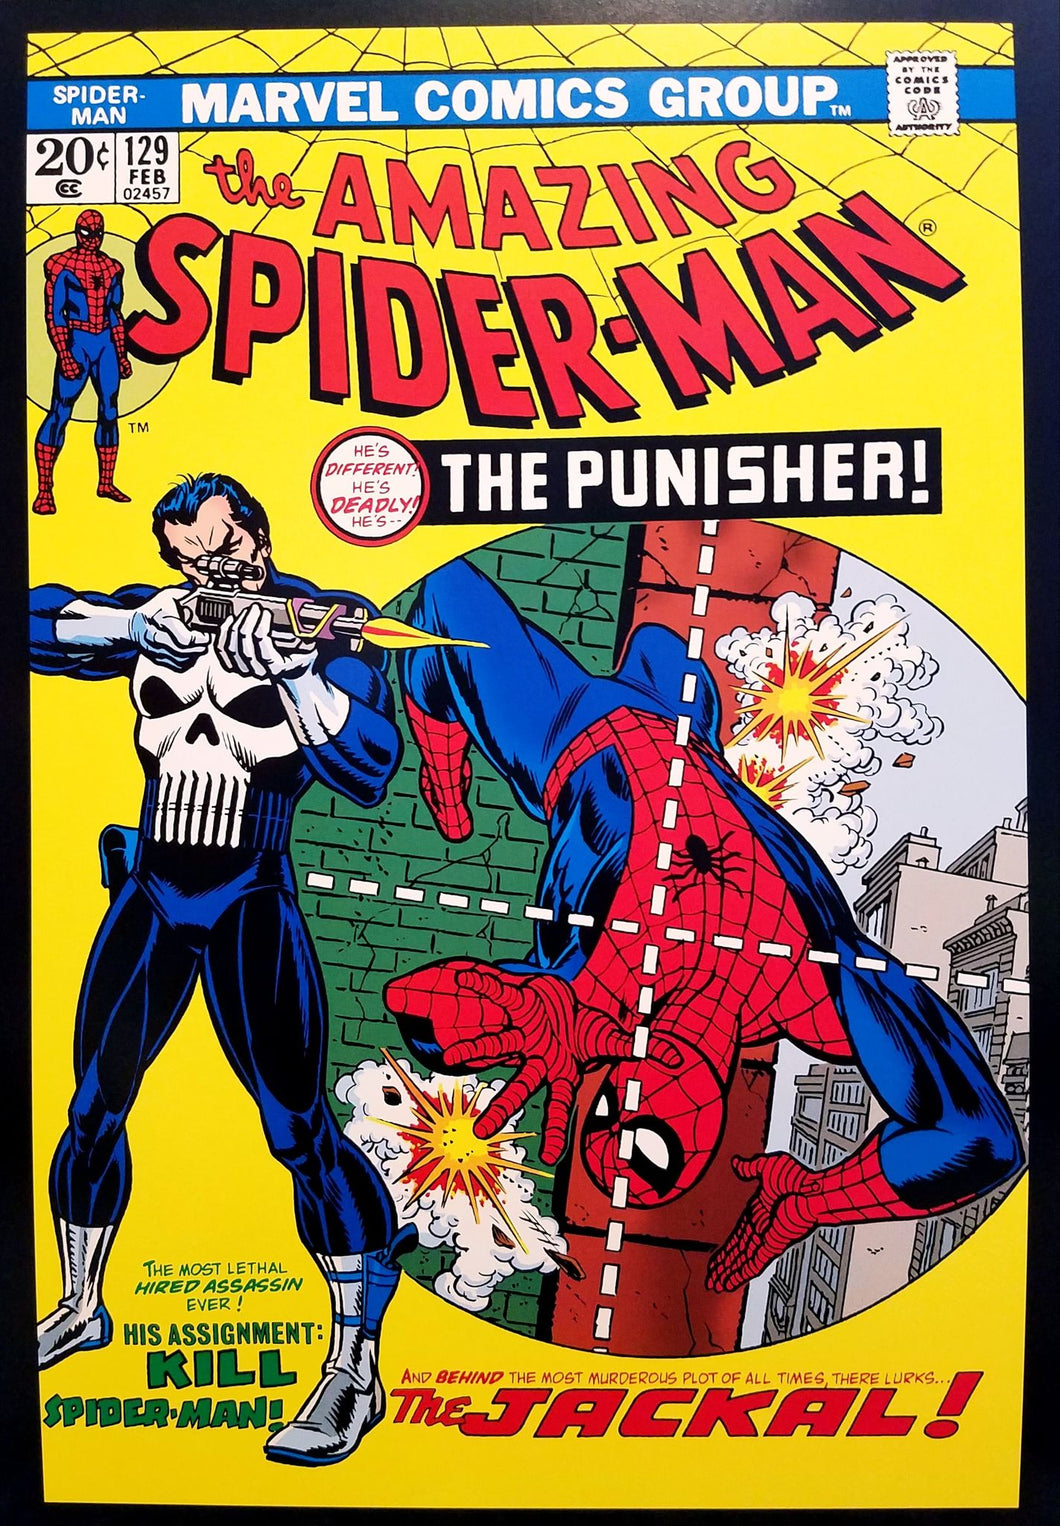 Amazing Spider-Man #129 12x16 FRAMED Art Print by Gil Kane (1st Punisher 1974), New Marvel Comics cardstock